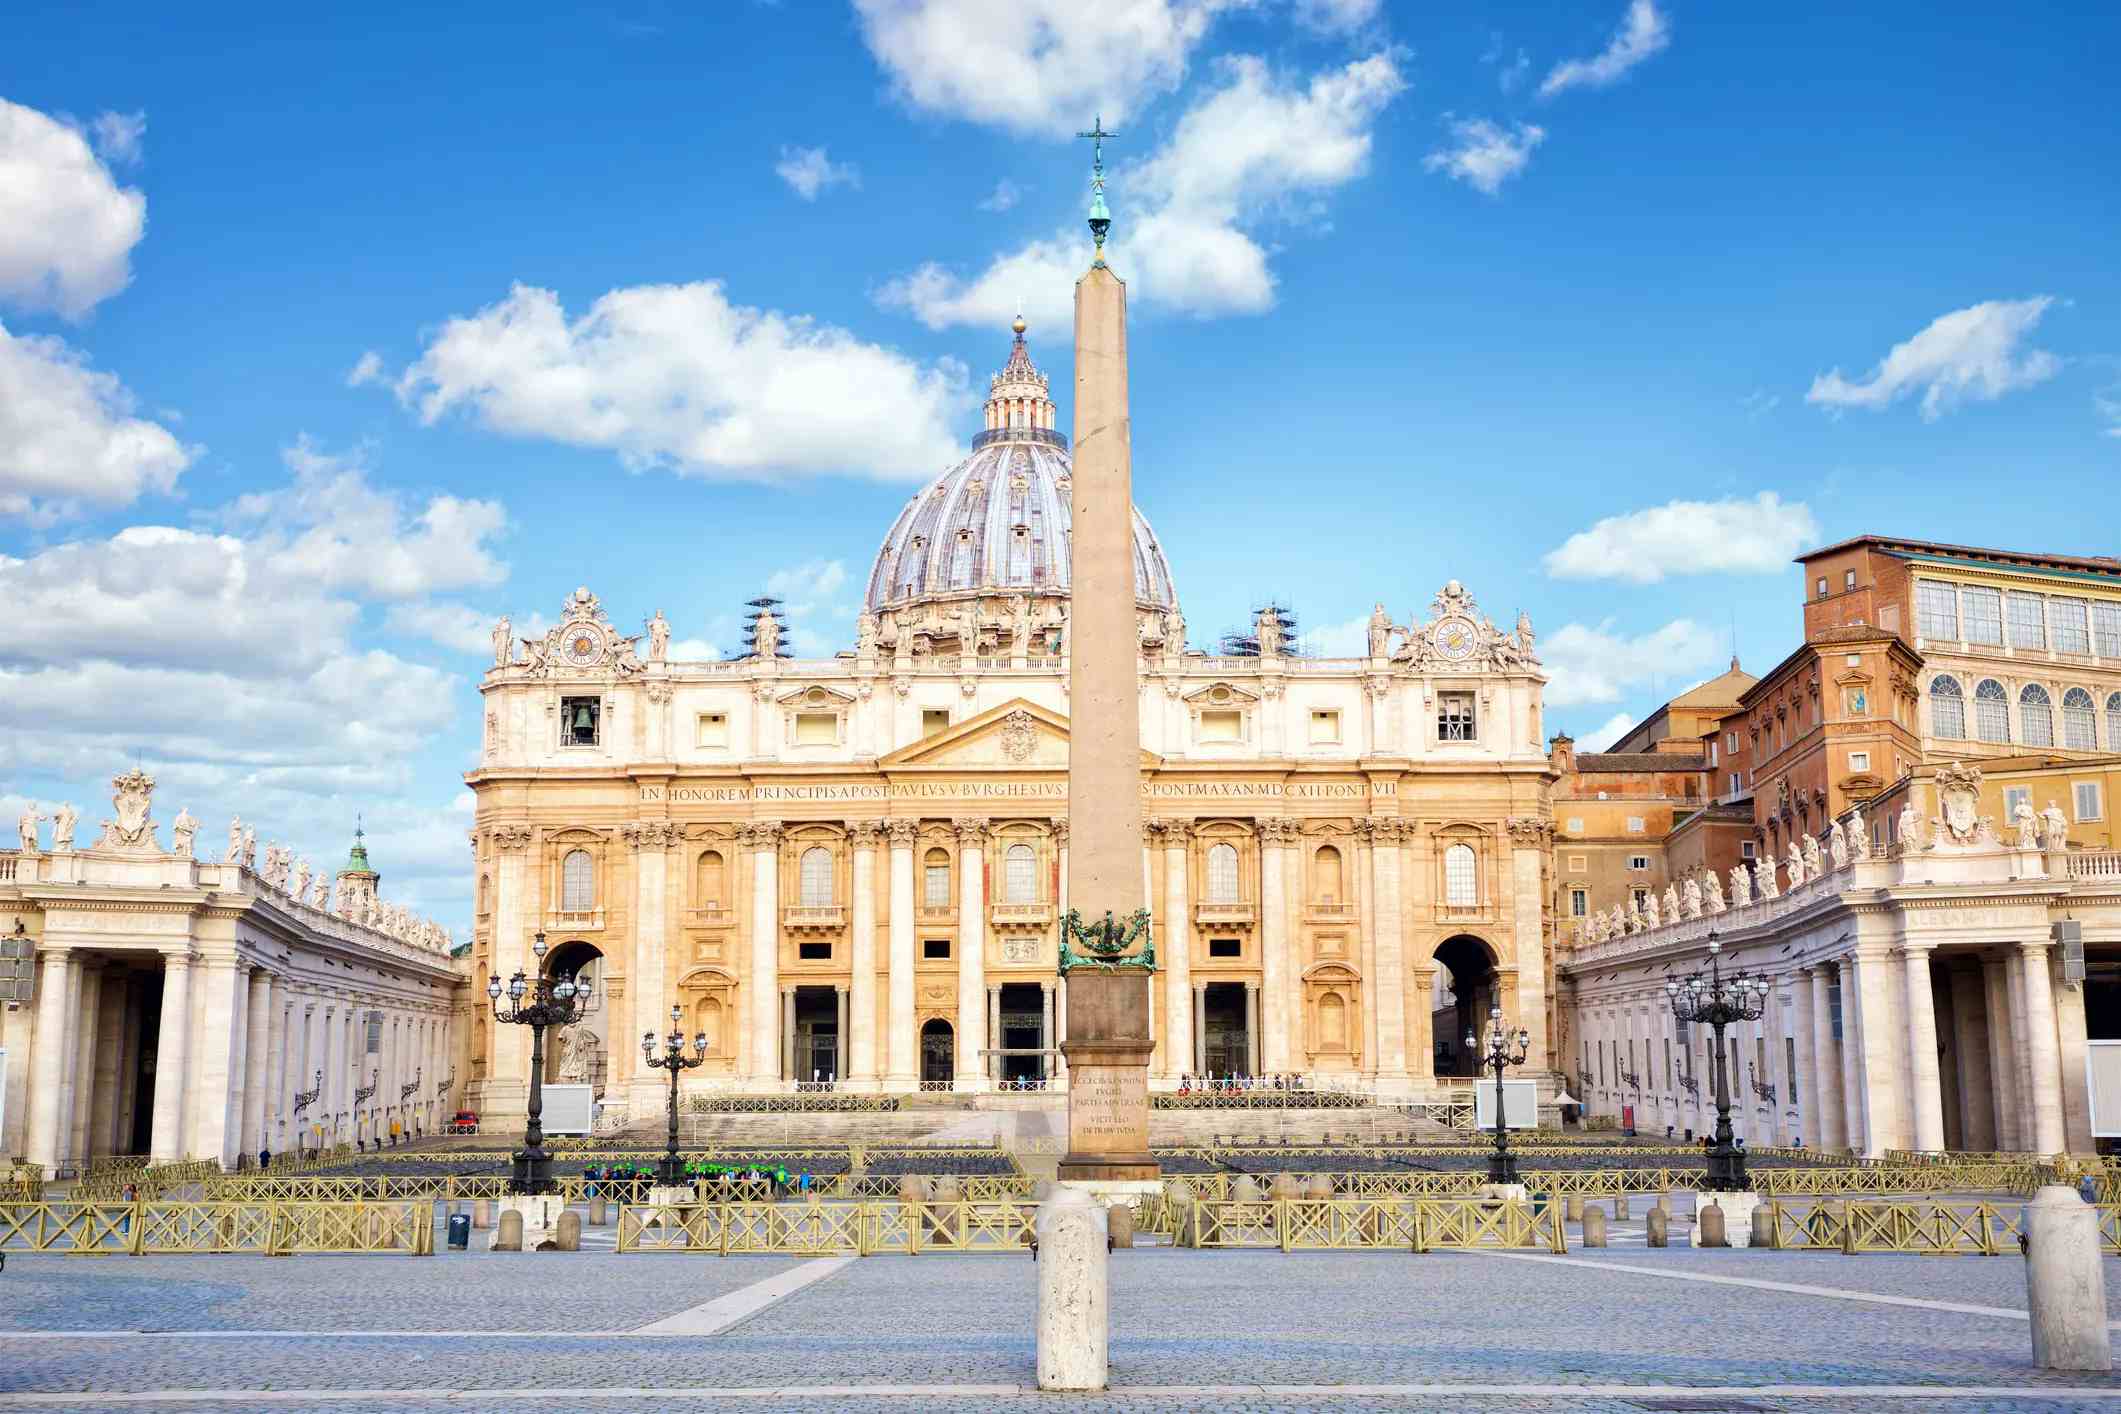 St. Peter's Basilica image